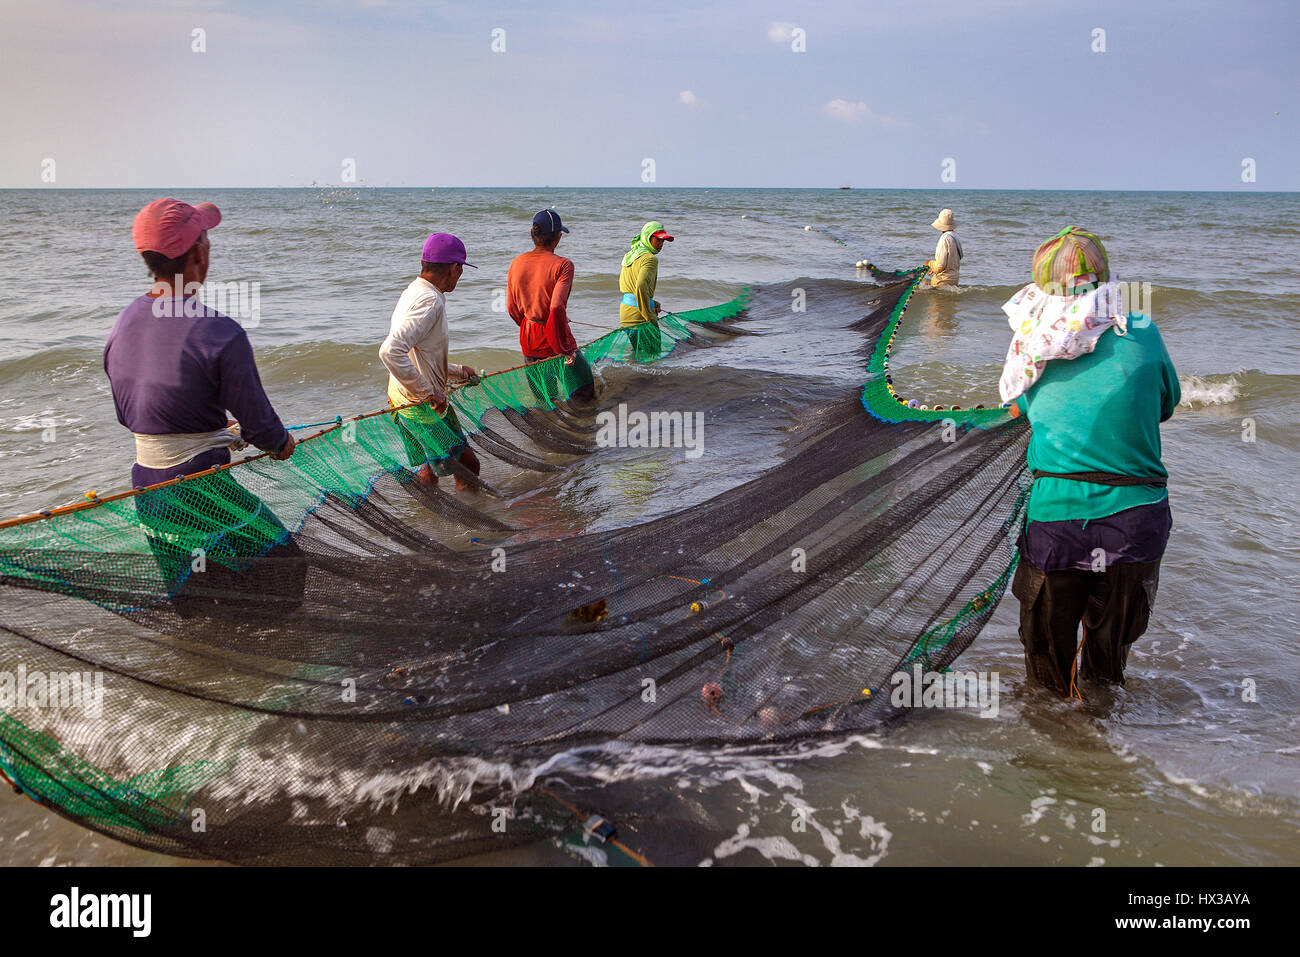 A group of Filipino fishermen haul their seine fishing net to